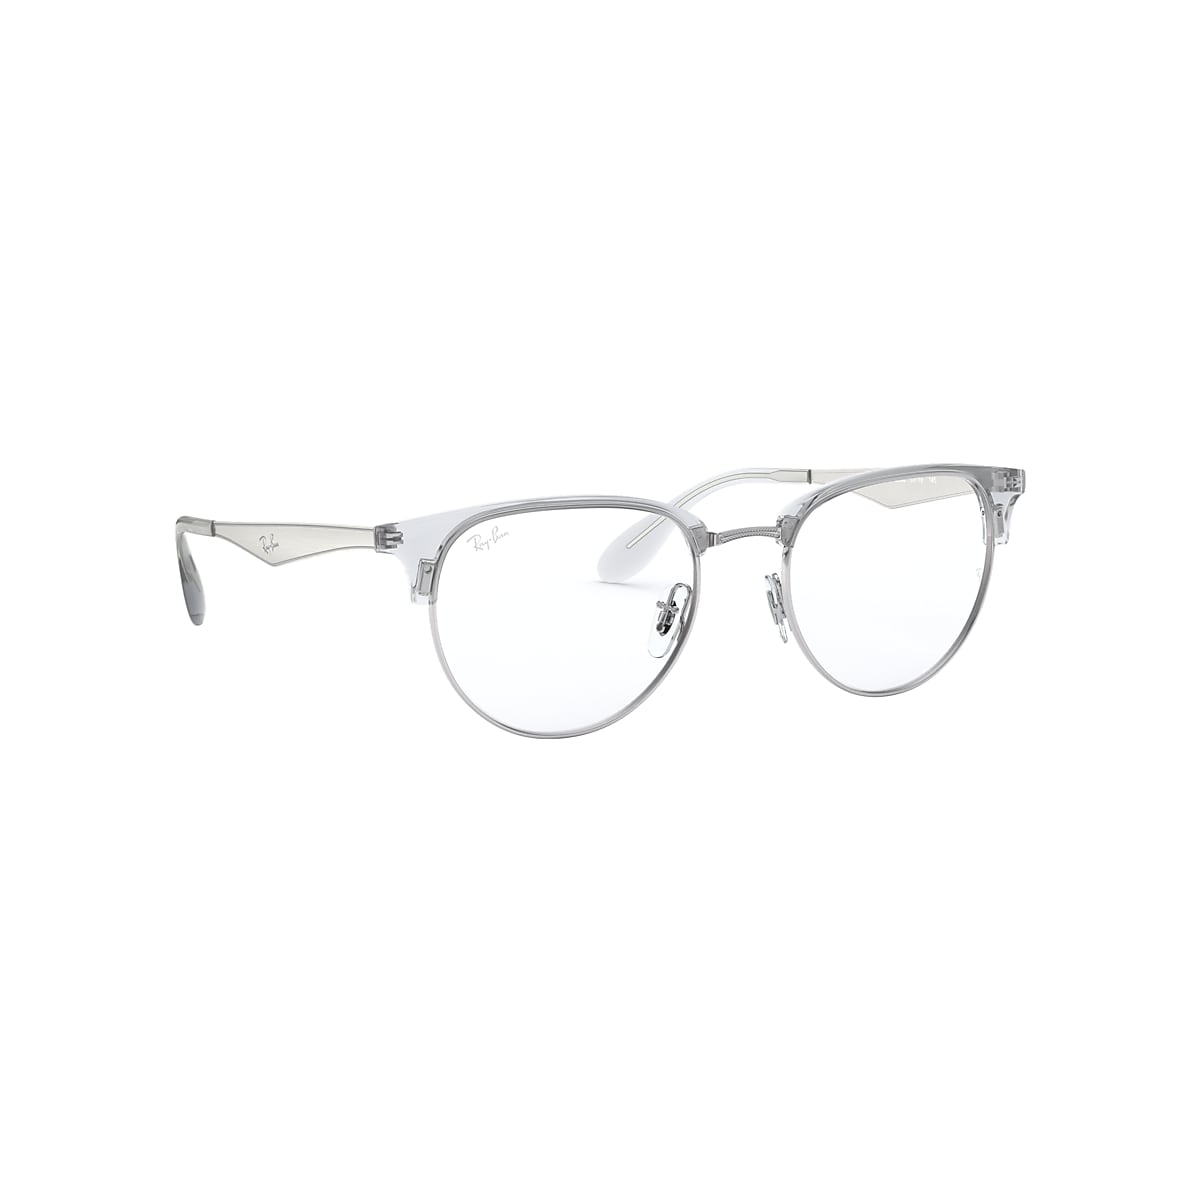 Rb6396 Optics Eyeglasses with Silver Frame | Ray-Ban®